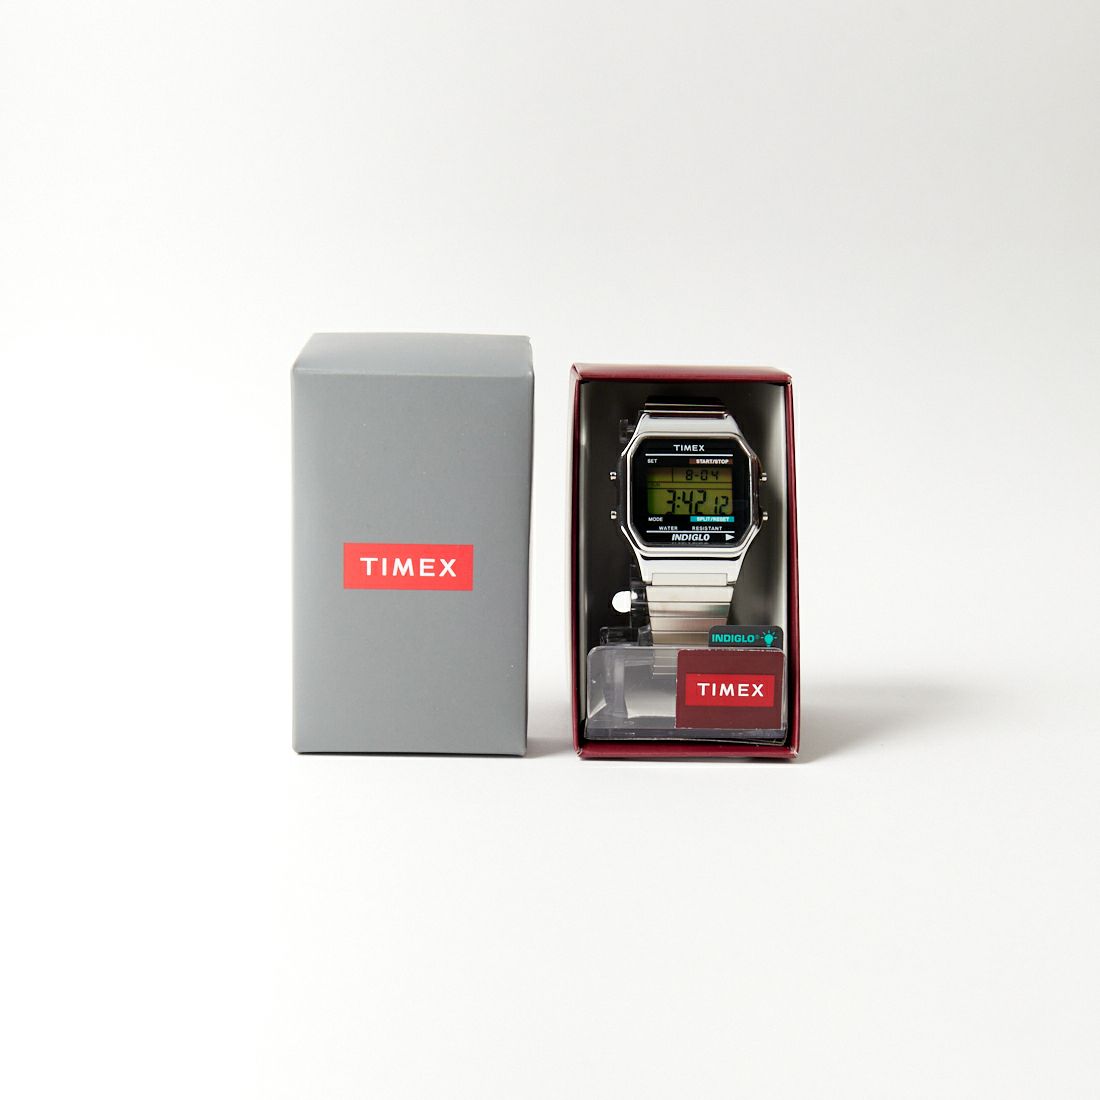 TIMEX [タイメックス] クラシックデジタル シルバー [T78587] SILVER